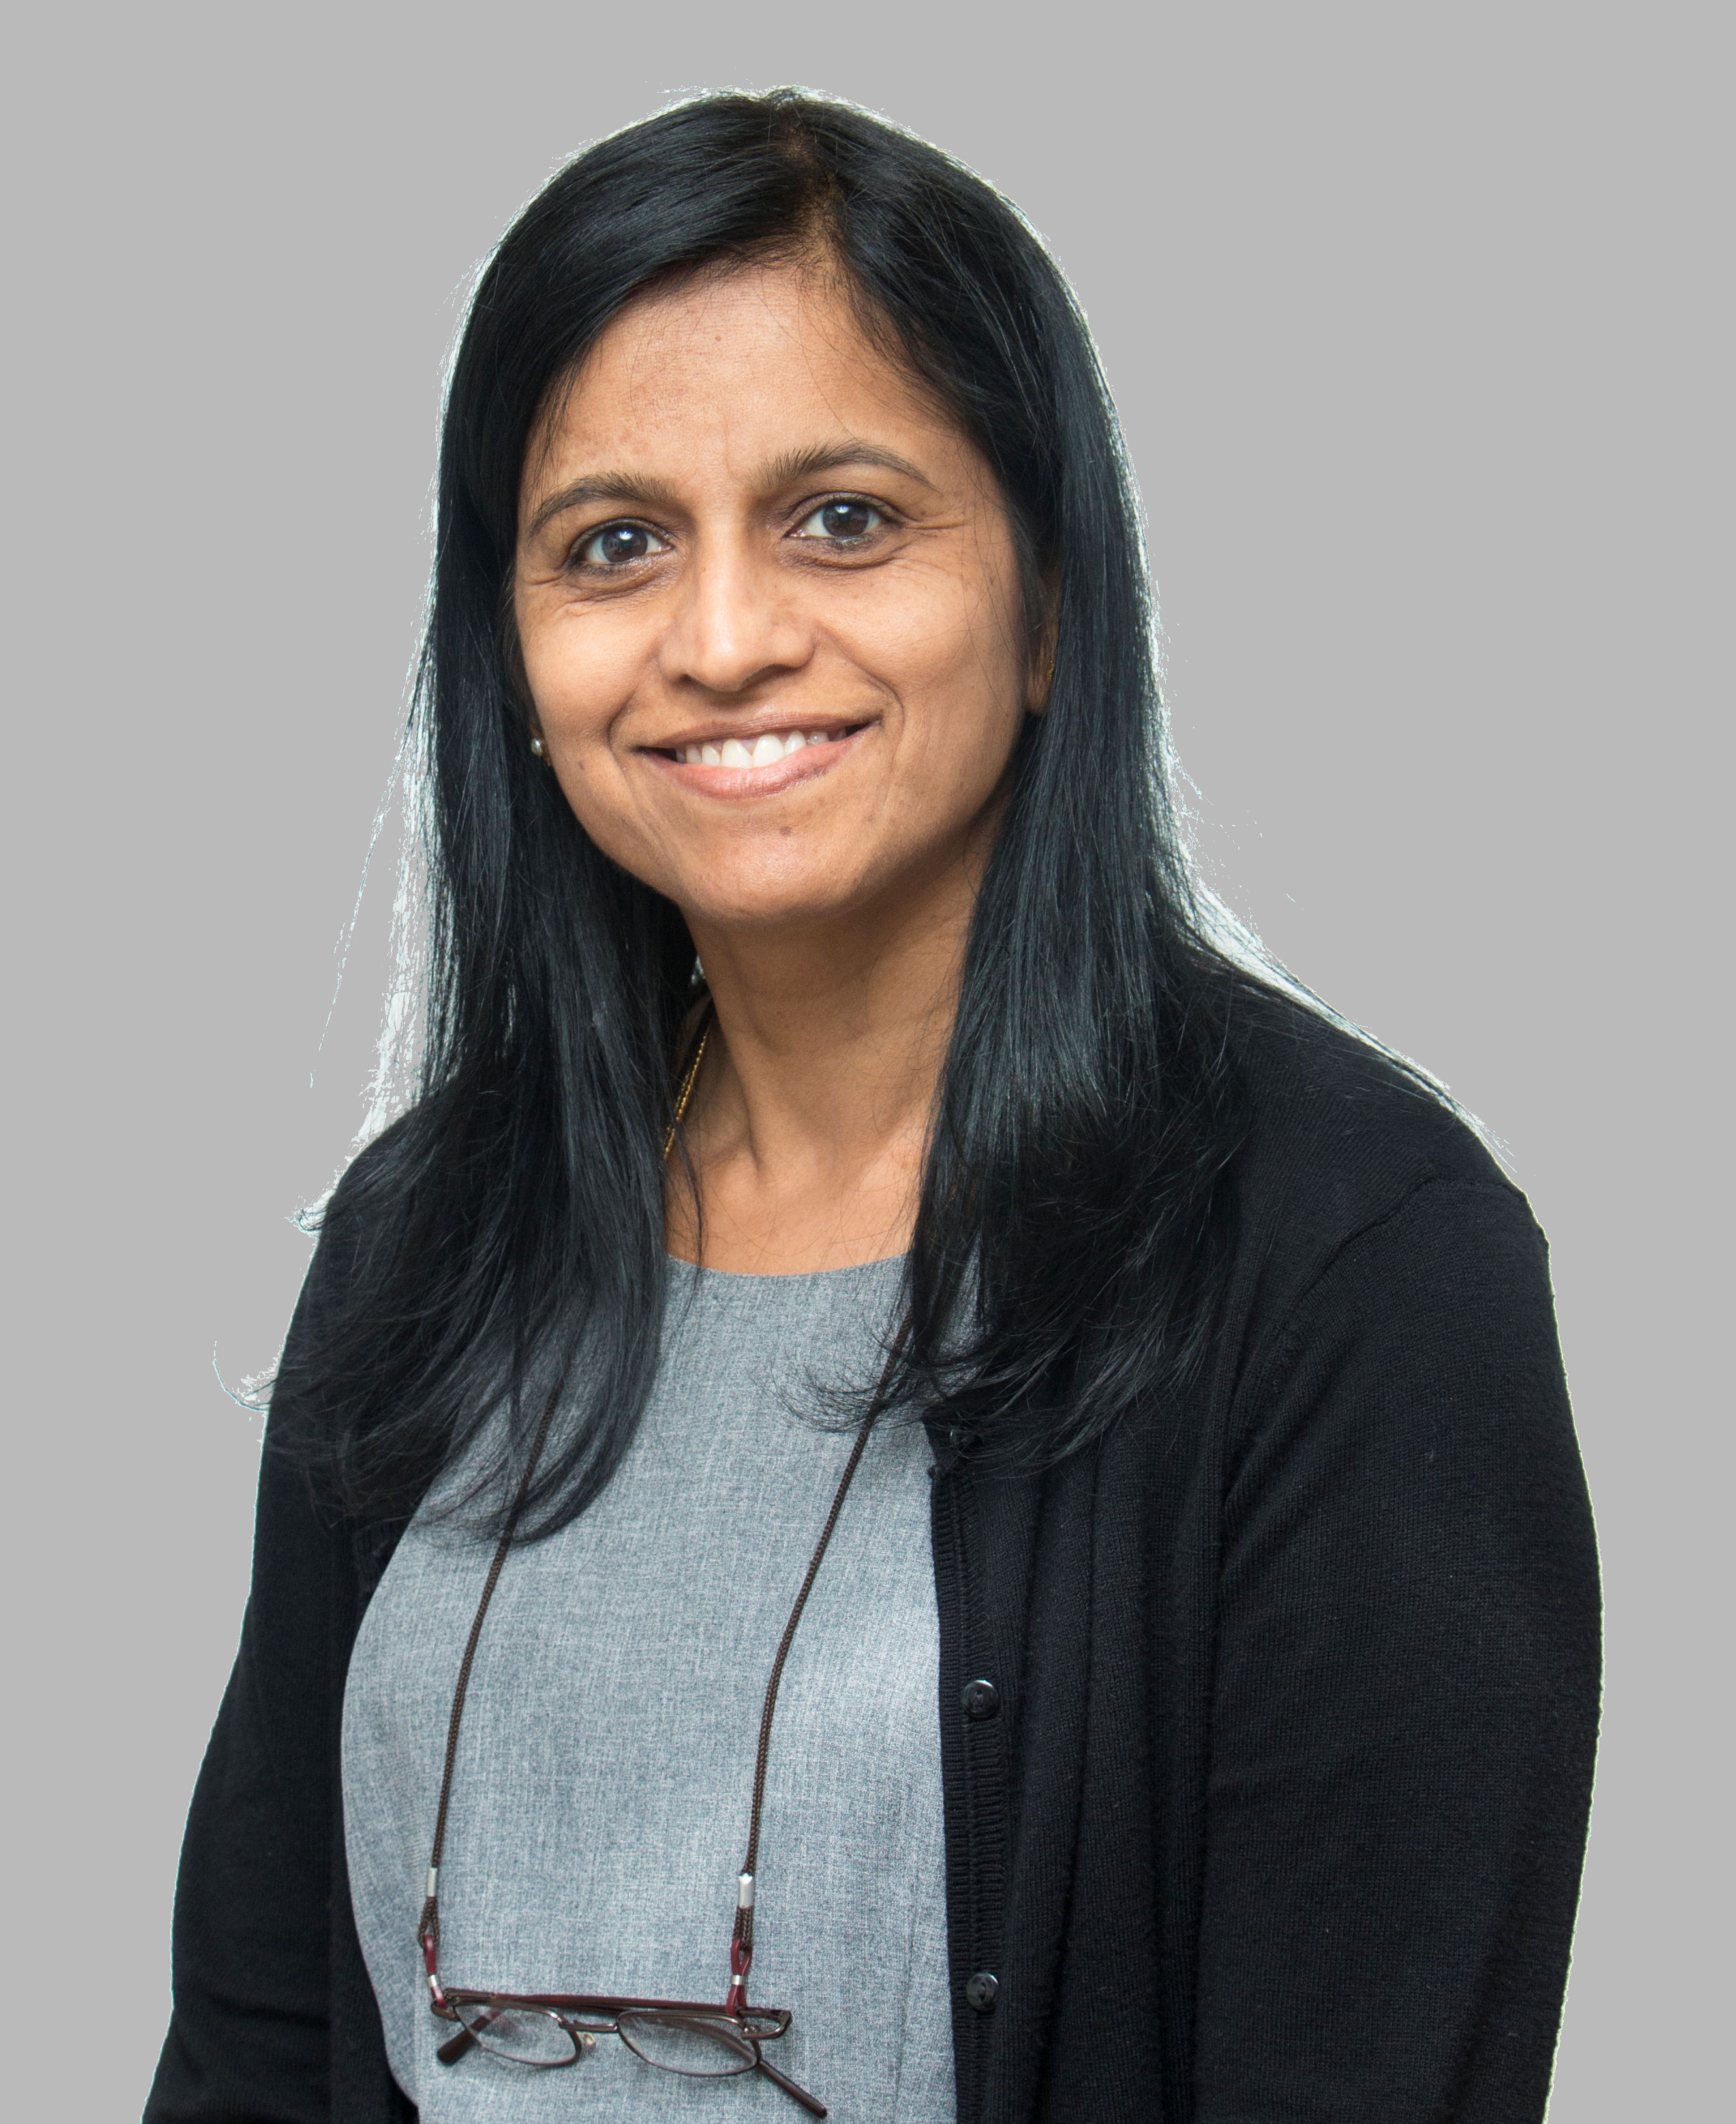 Professor Makani Purva